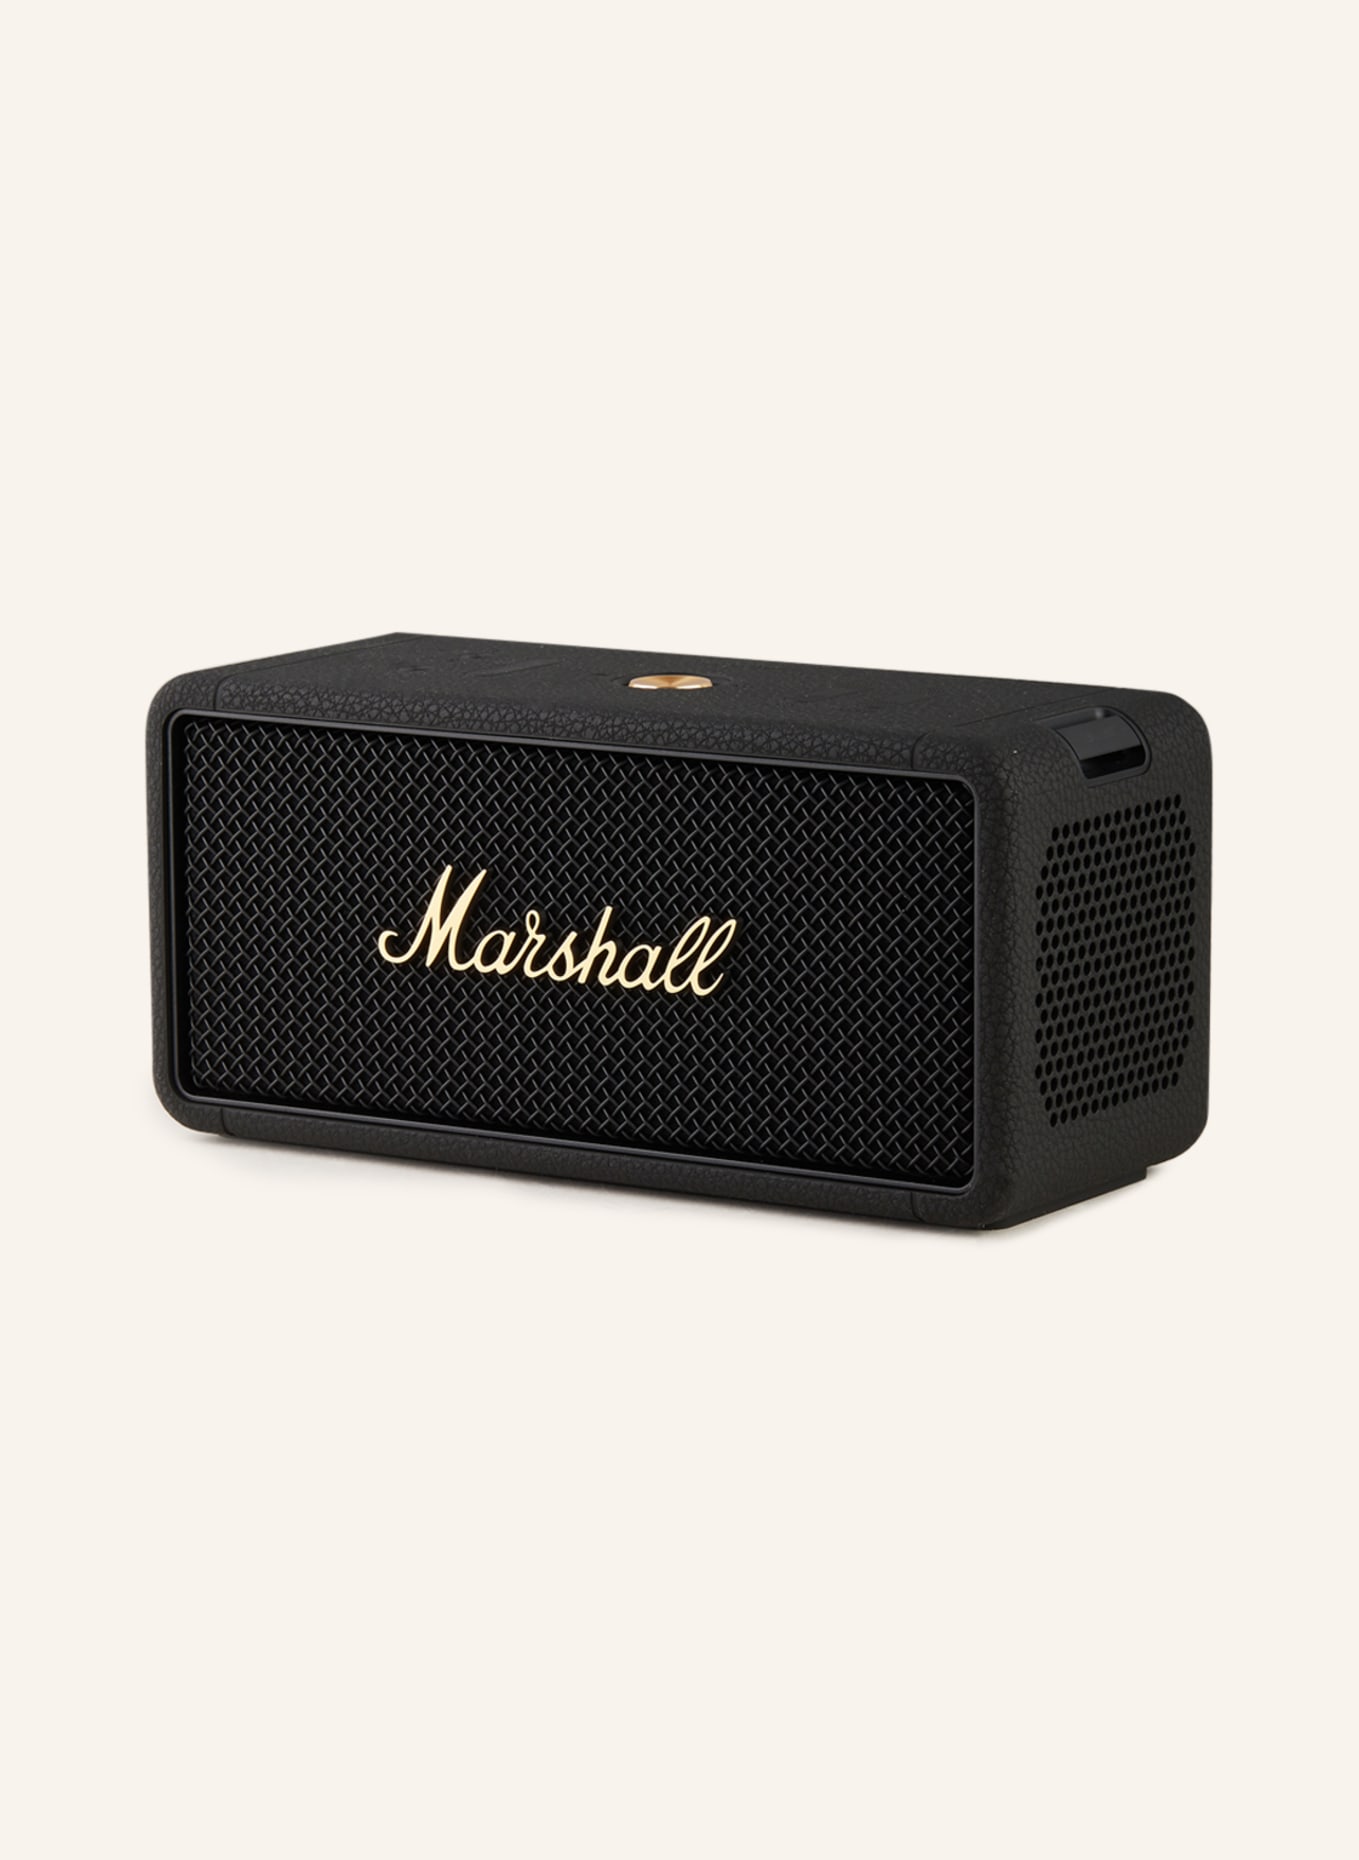 Marshall - MIDDLETON BLUETOOTH PORTABLE SPEAKER - Black/Brass